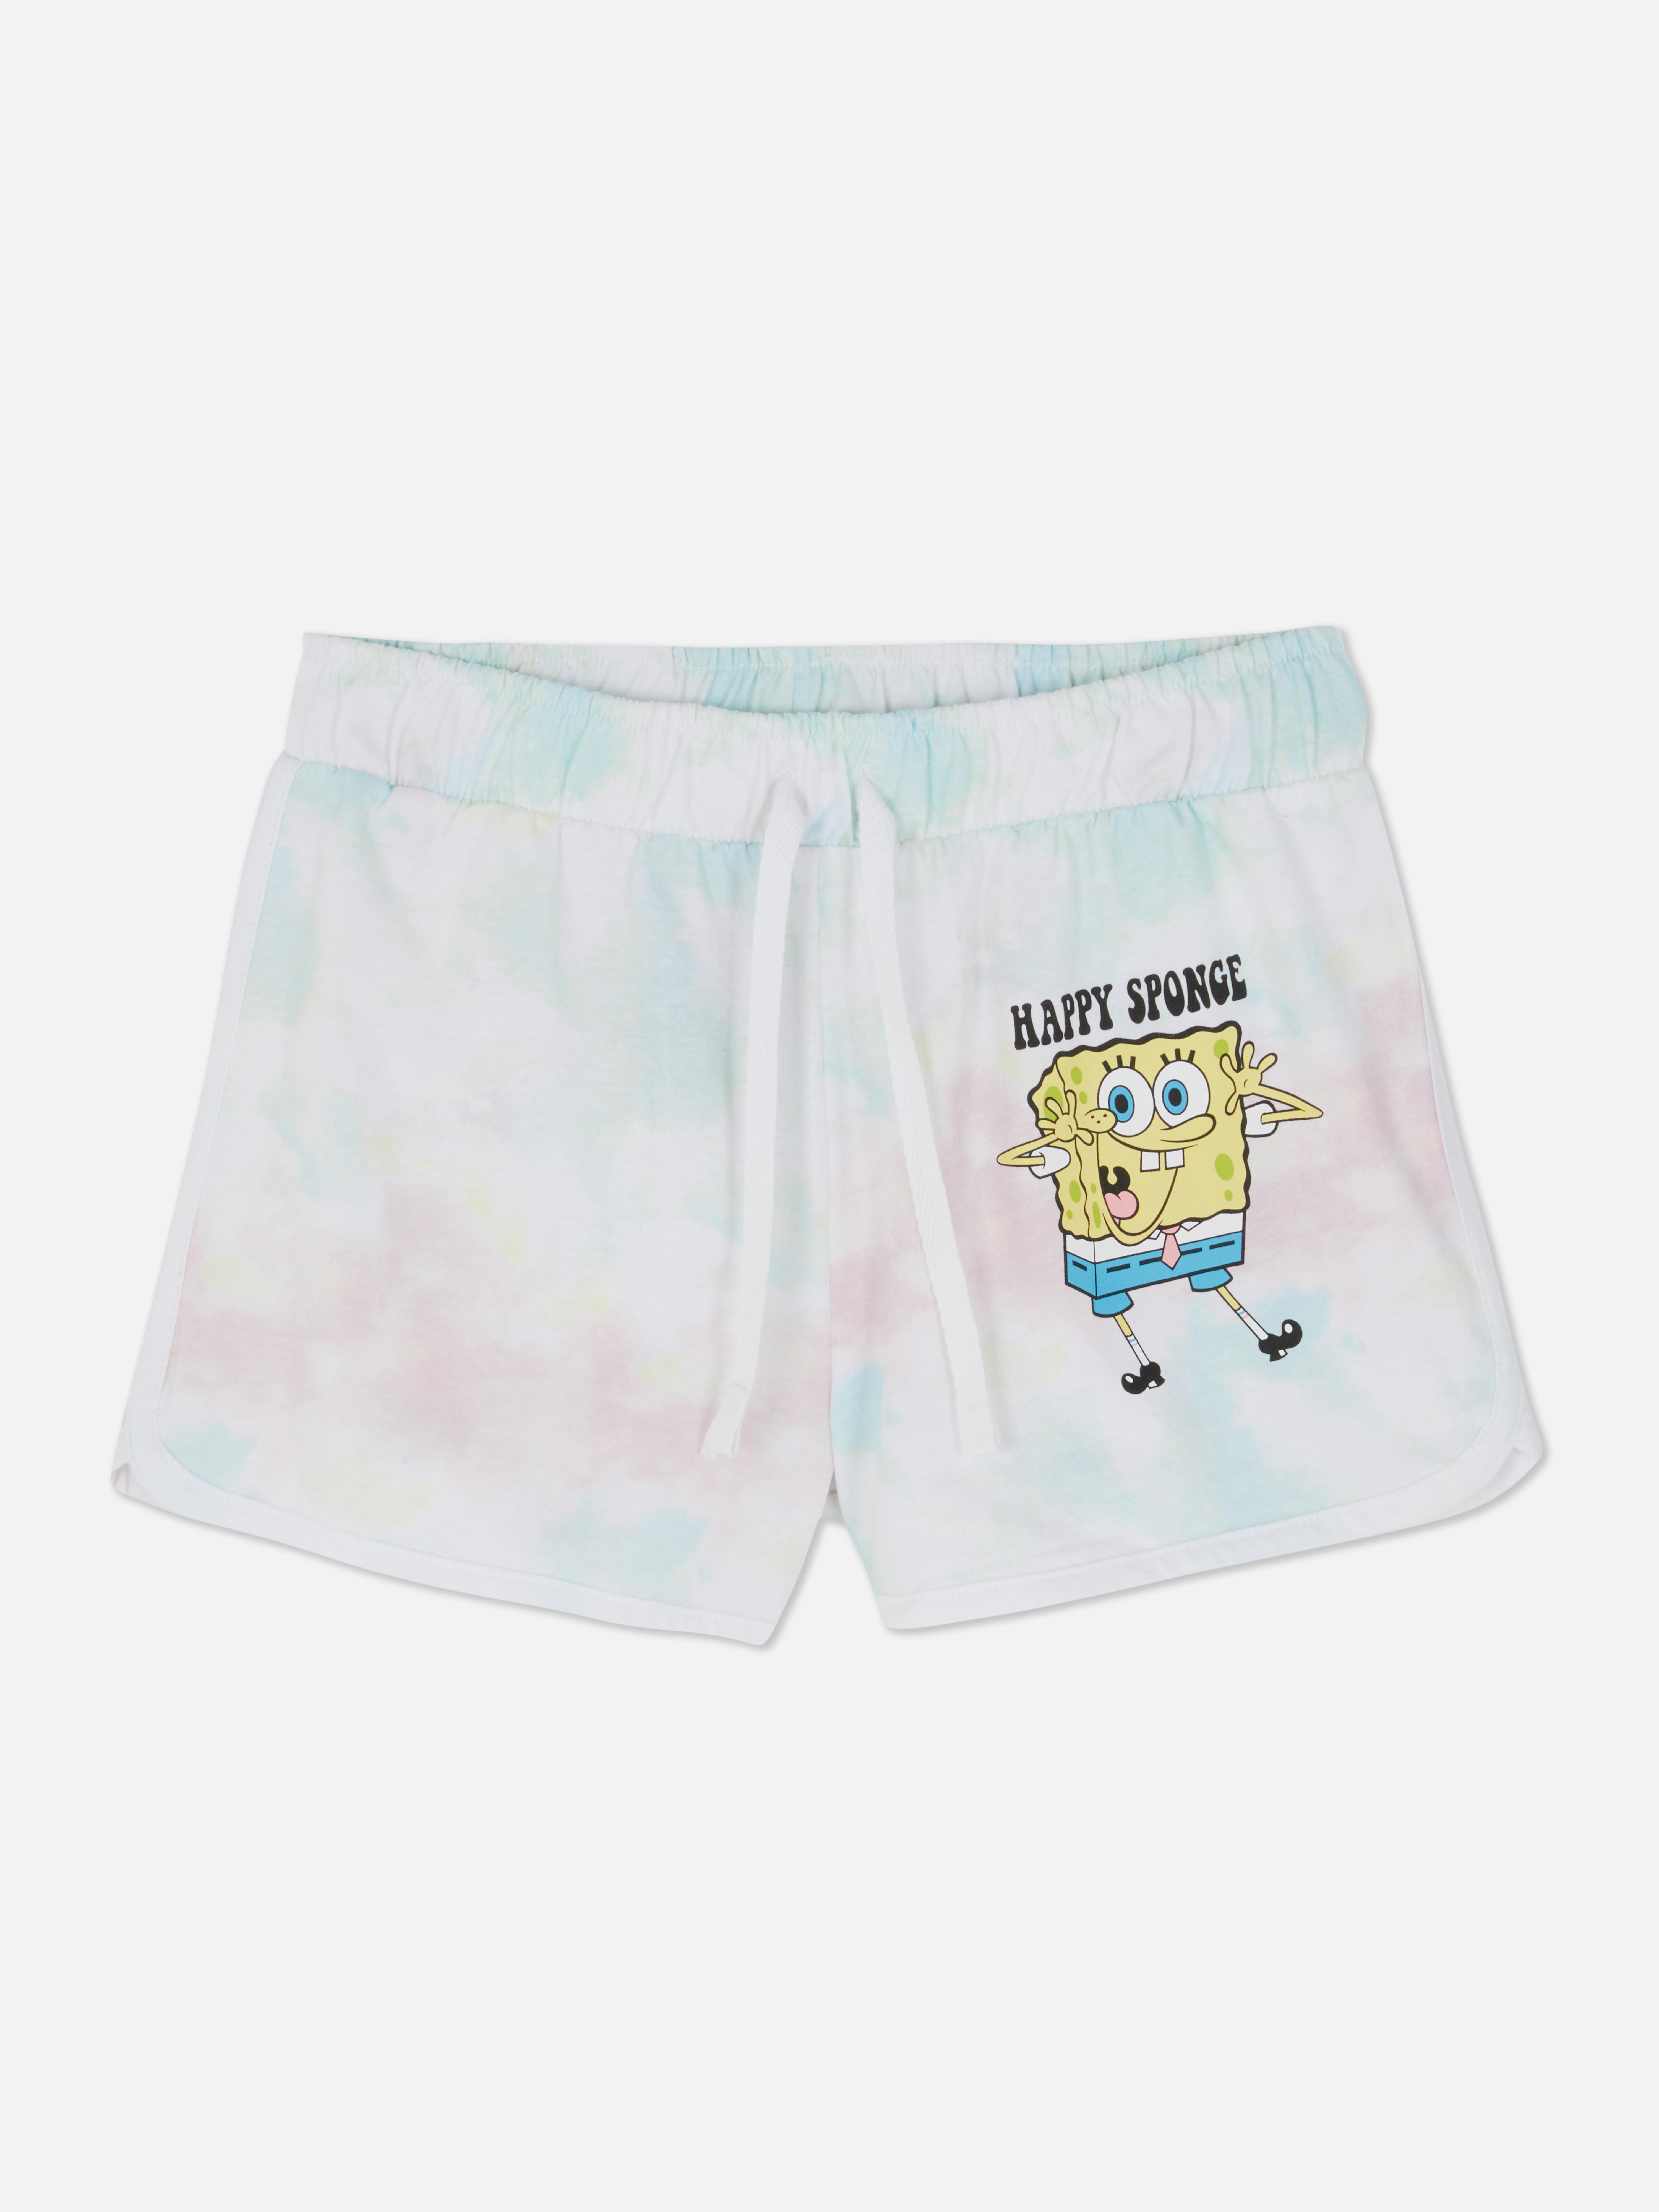 SpongeBob SquarePants Tie Dye Shorts